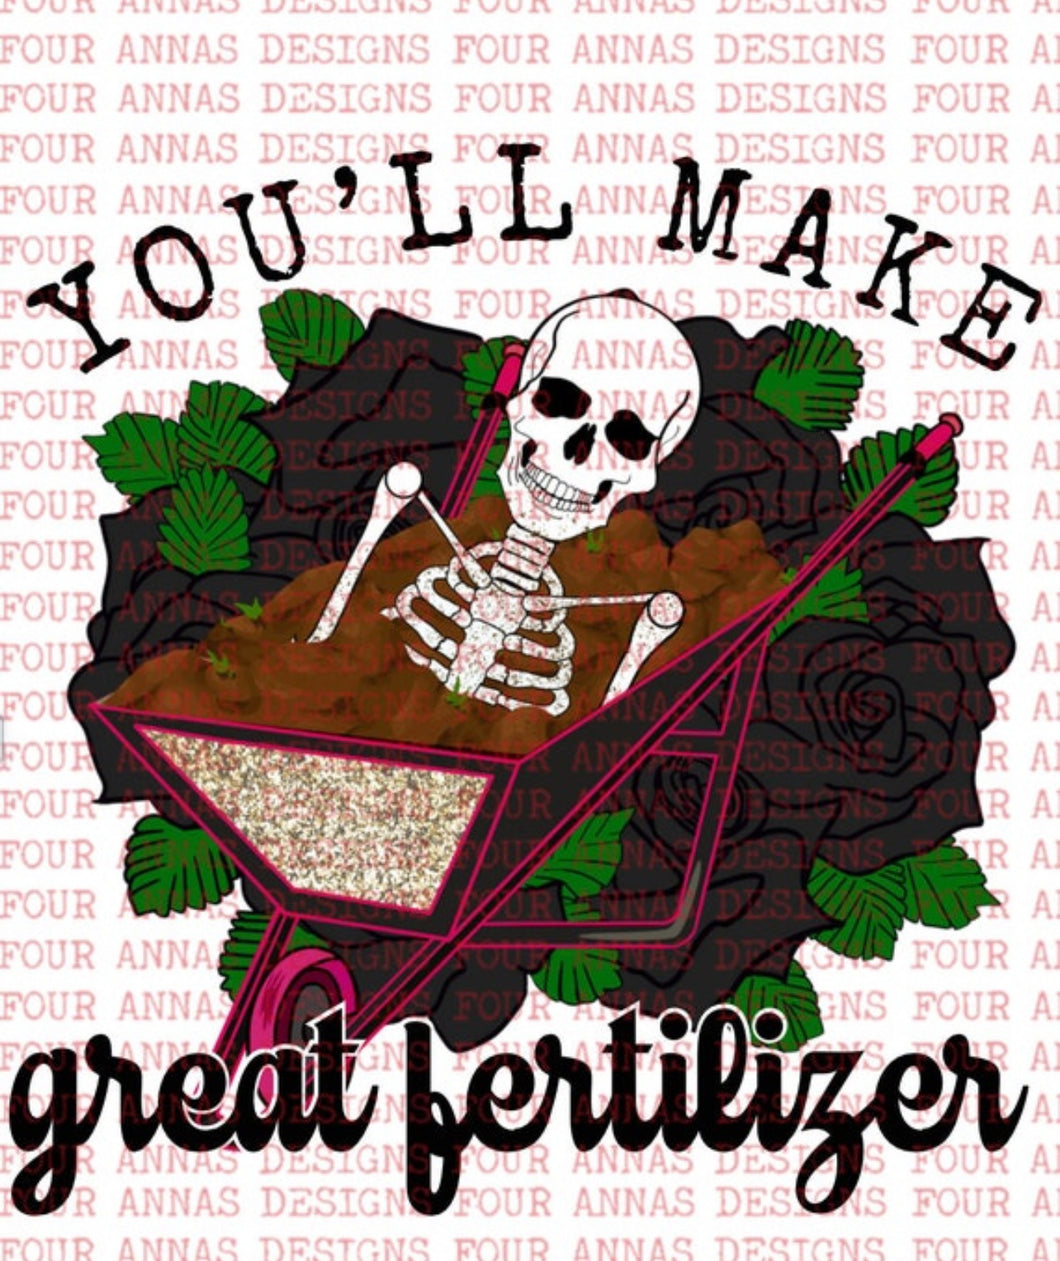 You’ll make great fertilizer